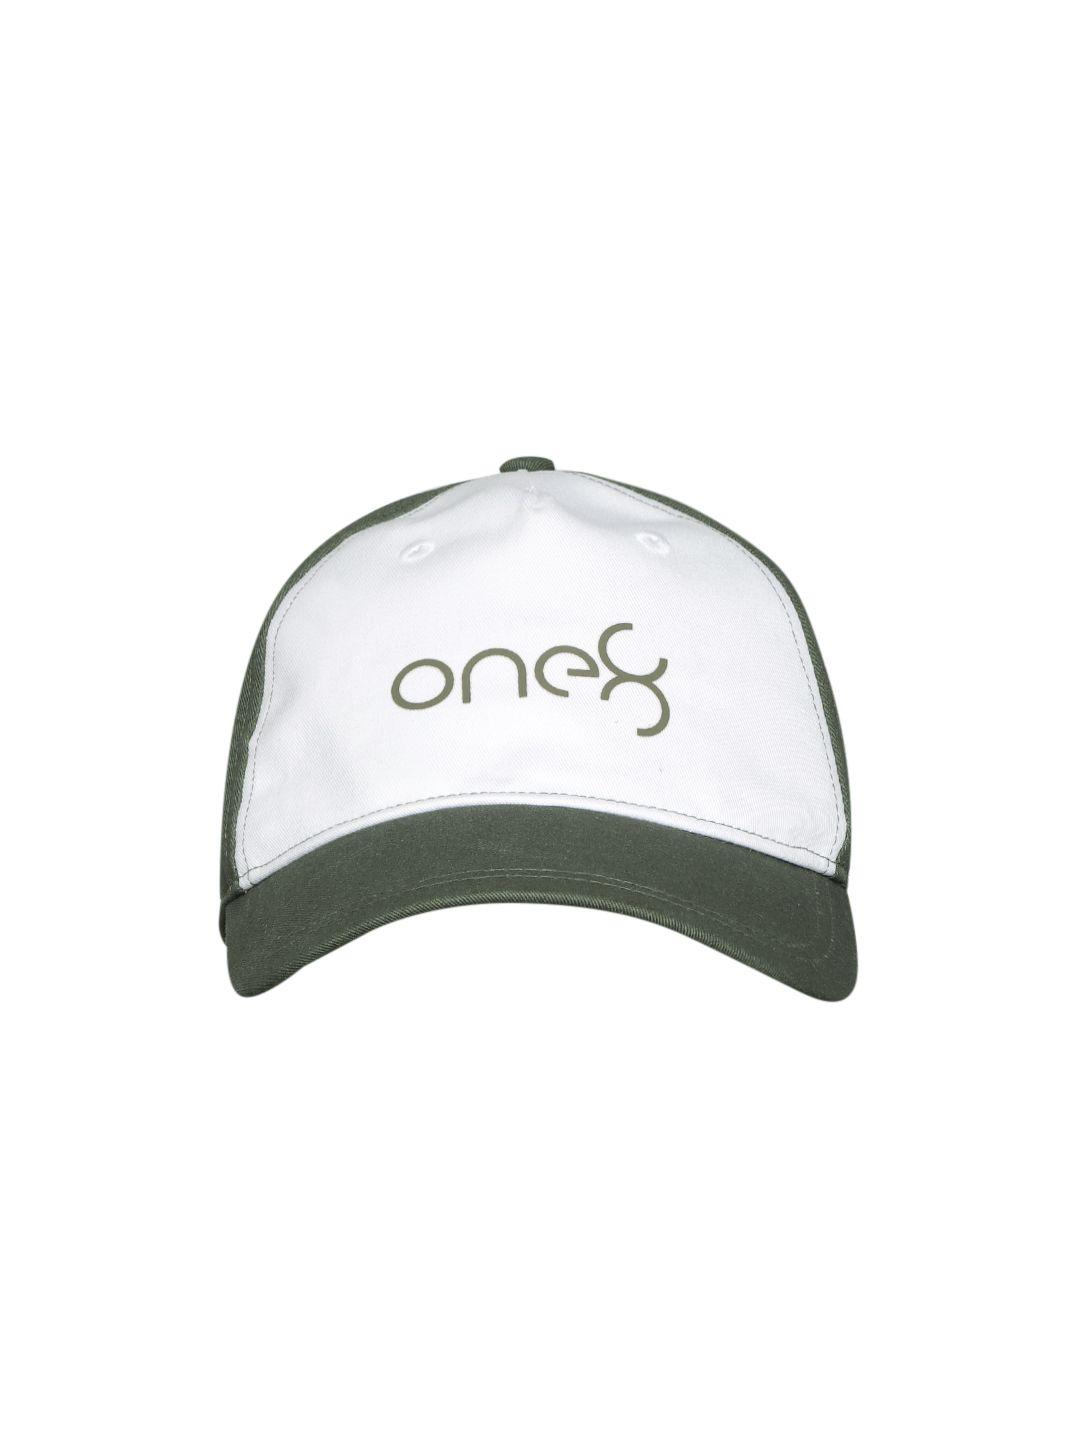 one8-x-puma-unisex-green-&-white-brand-logo-printed-snapback-cap